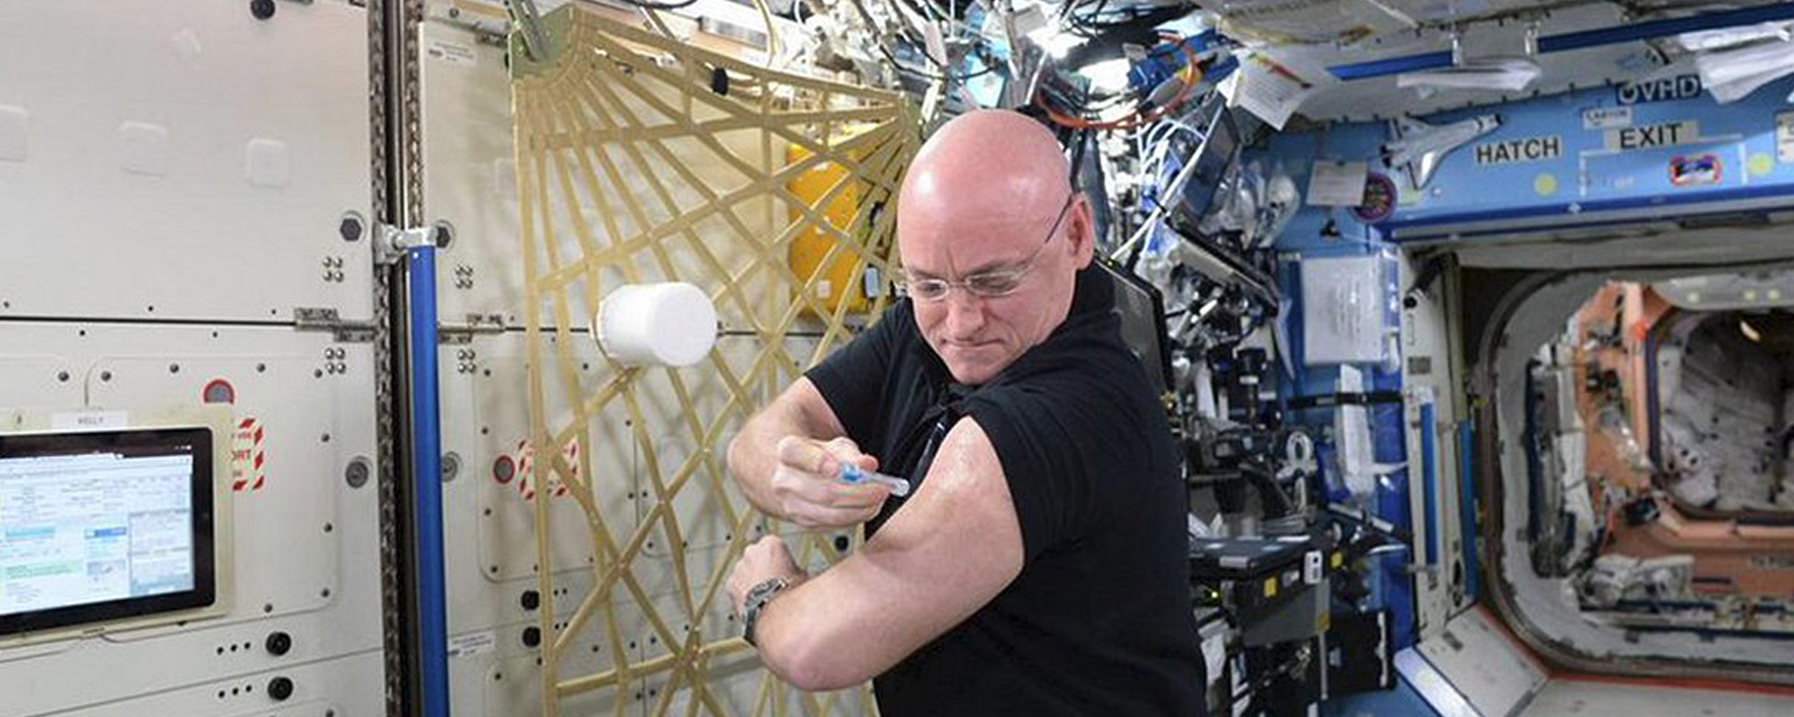 Scott Kelly Gives Himself a Flu Shot on ISS